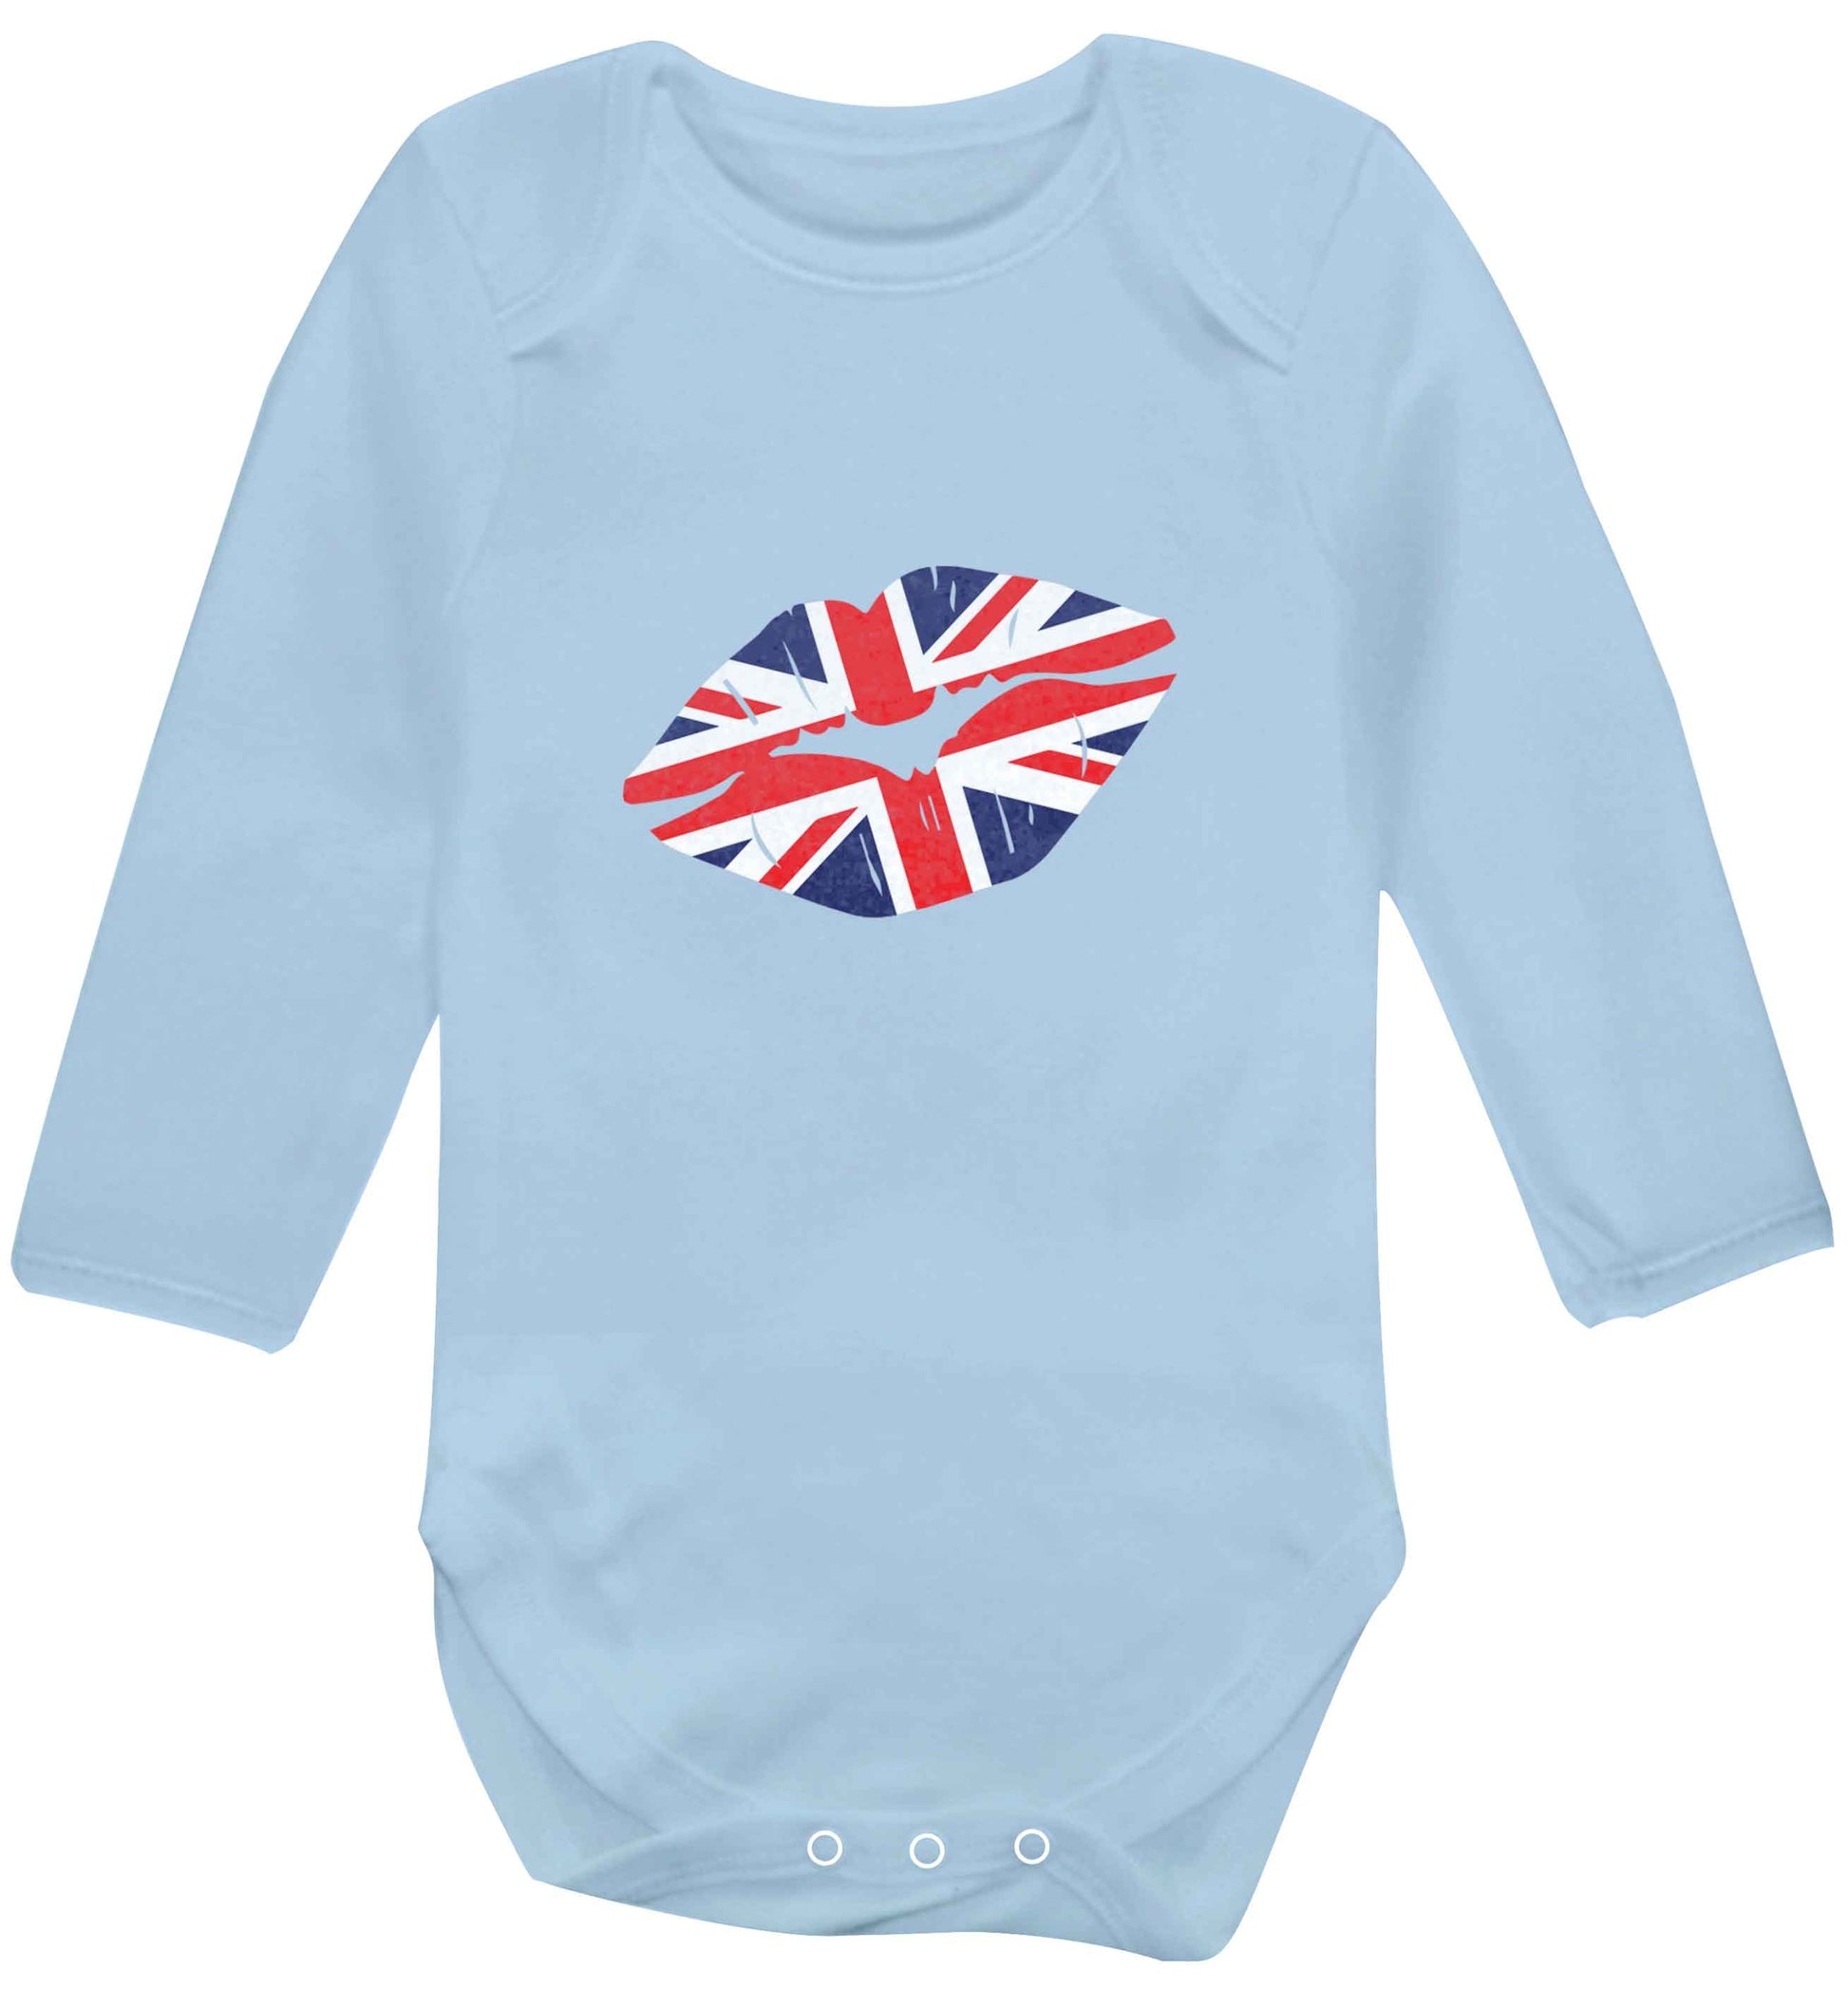 British flag kiss baby vest long sleeved pale blue 6-12 months